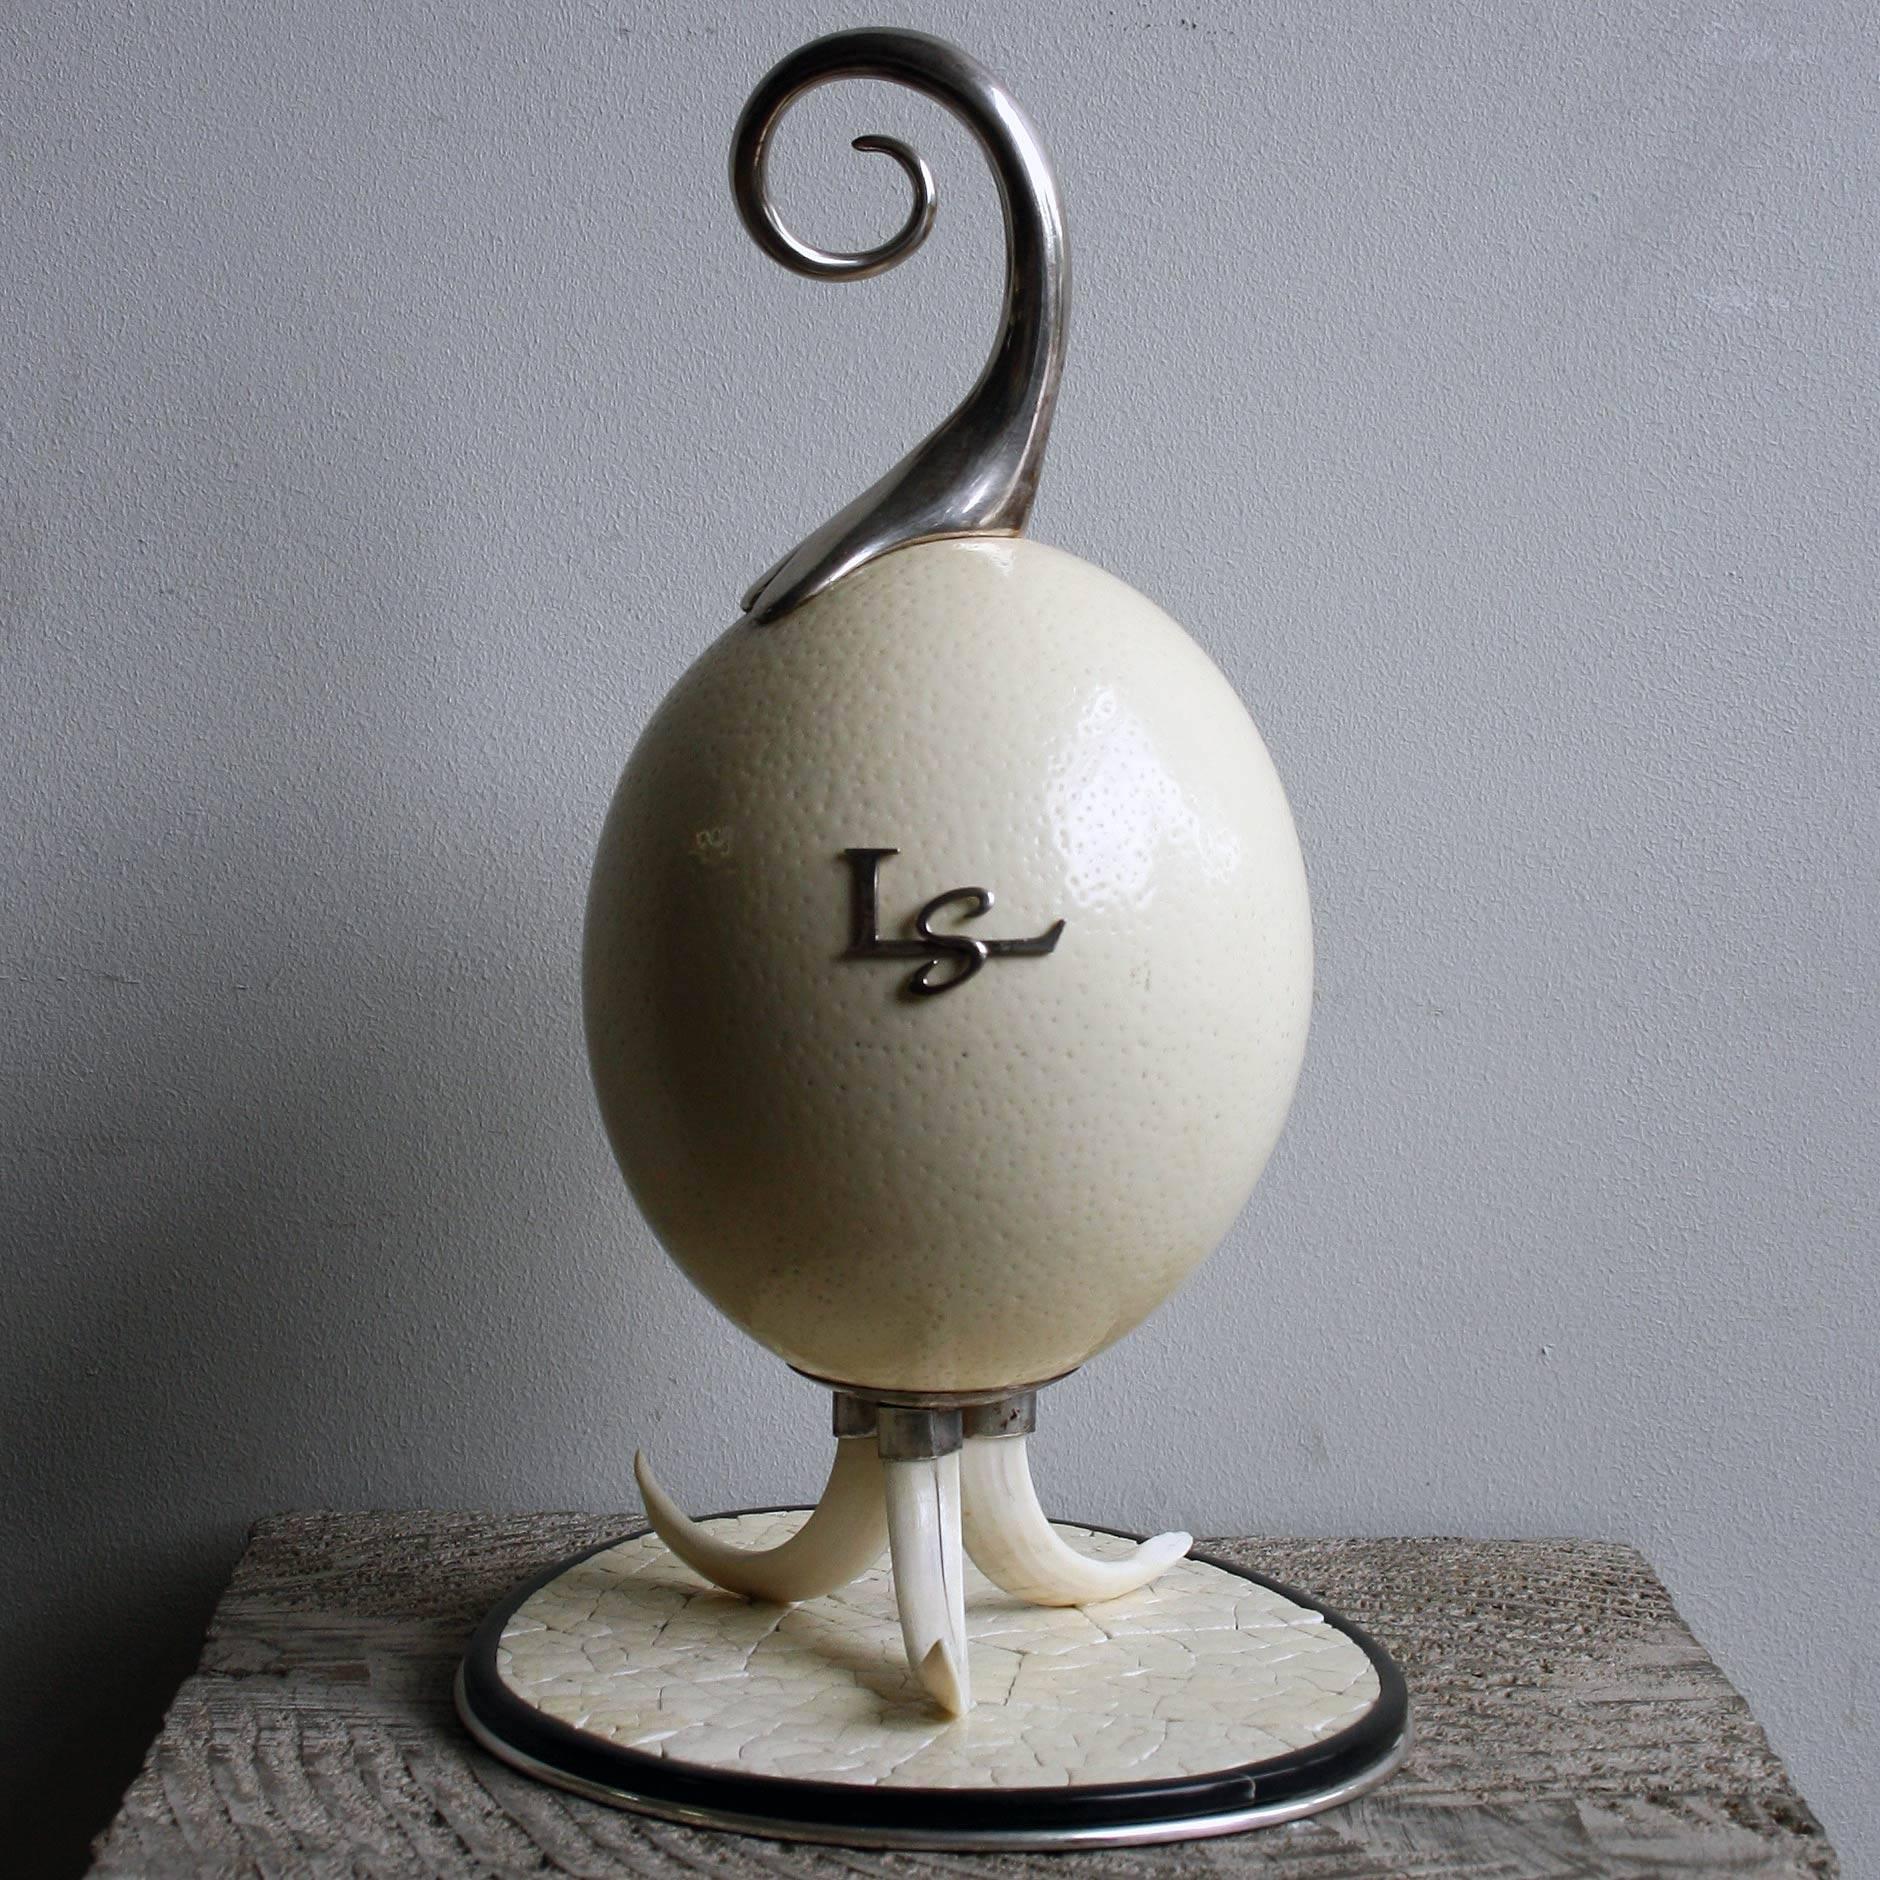 ostrich egg decoration for sale